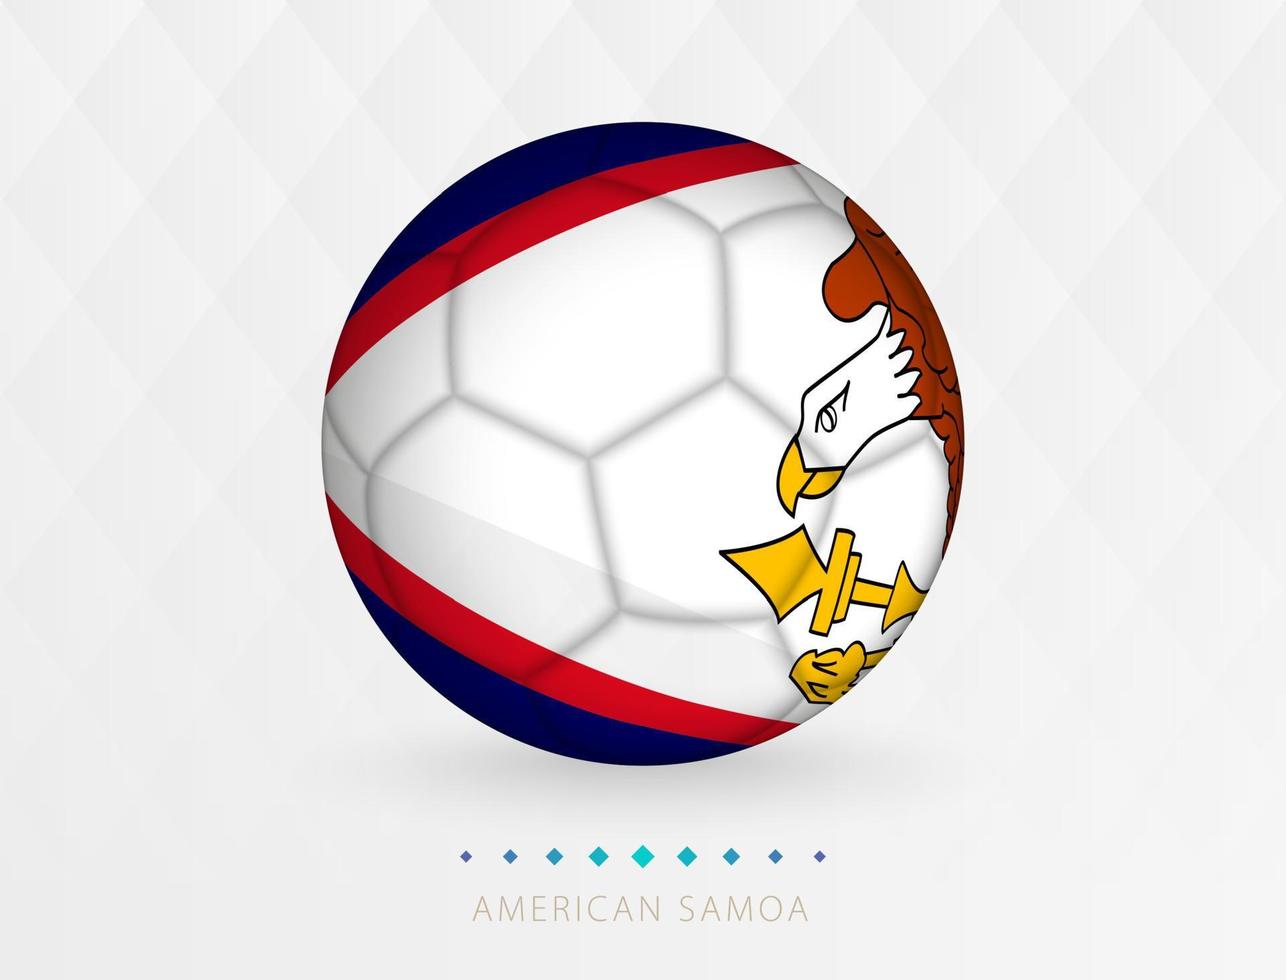 Football ball with American Samoa flag pattern, soccer ball with flag of American Samoa national team. vector